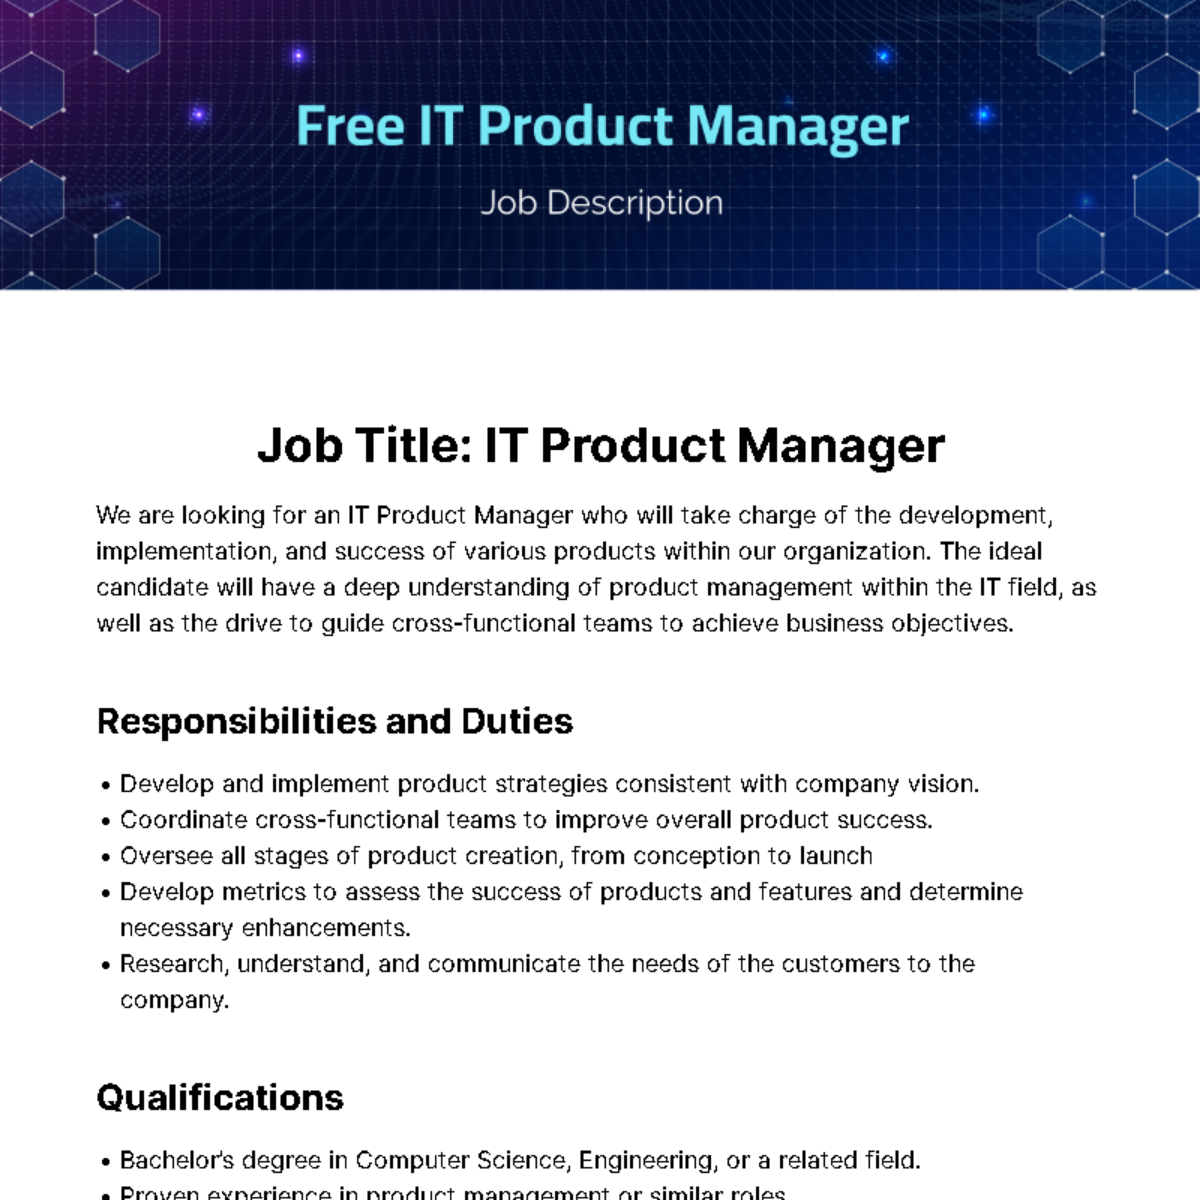 Free IT Product Manager Job Description Template